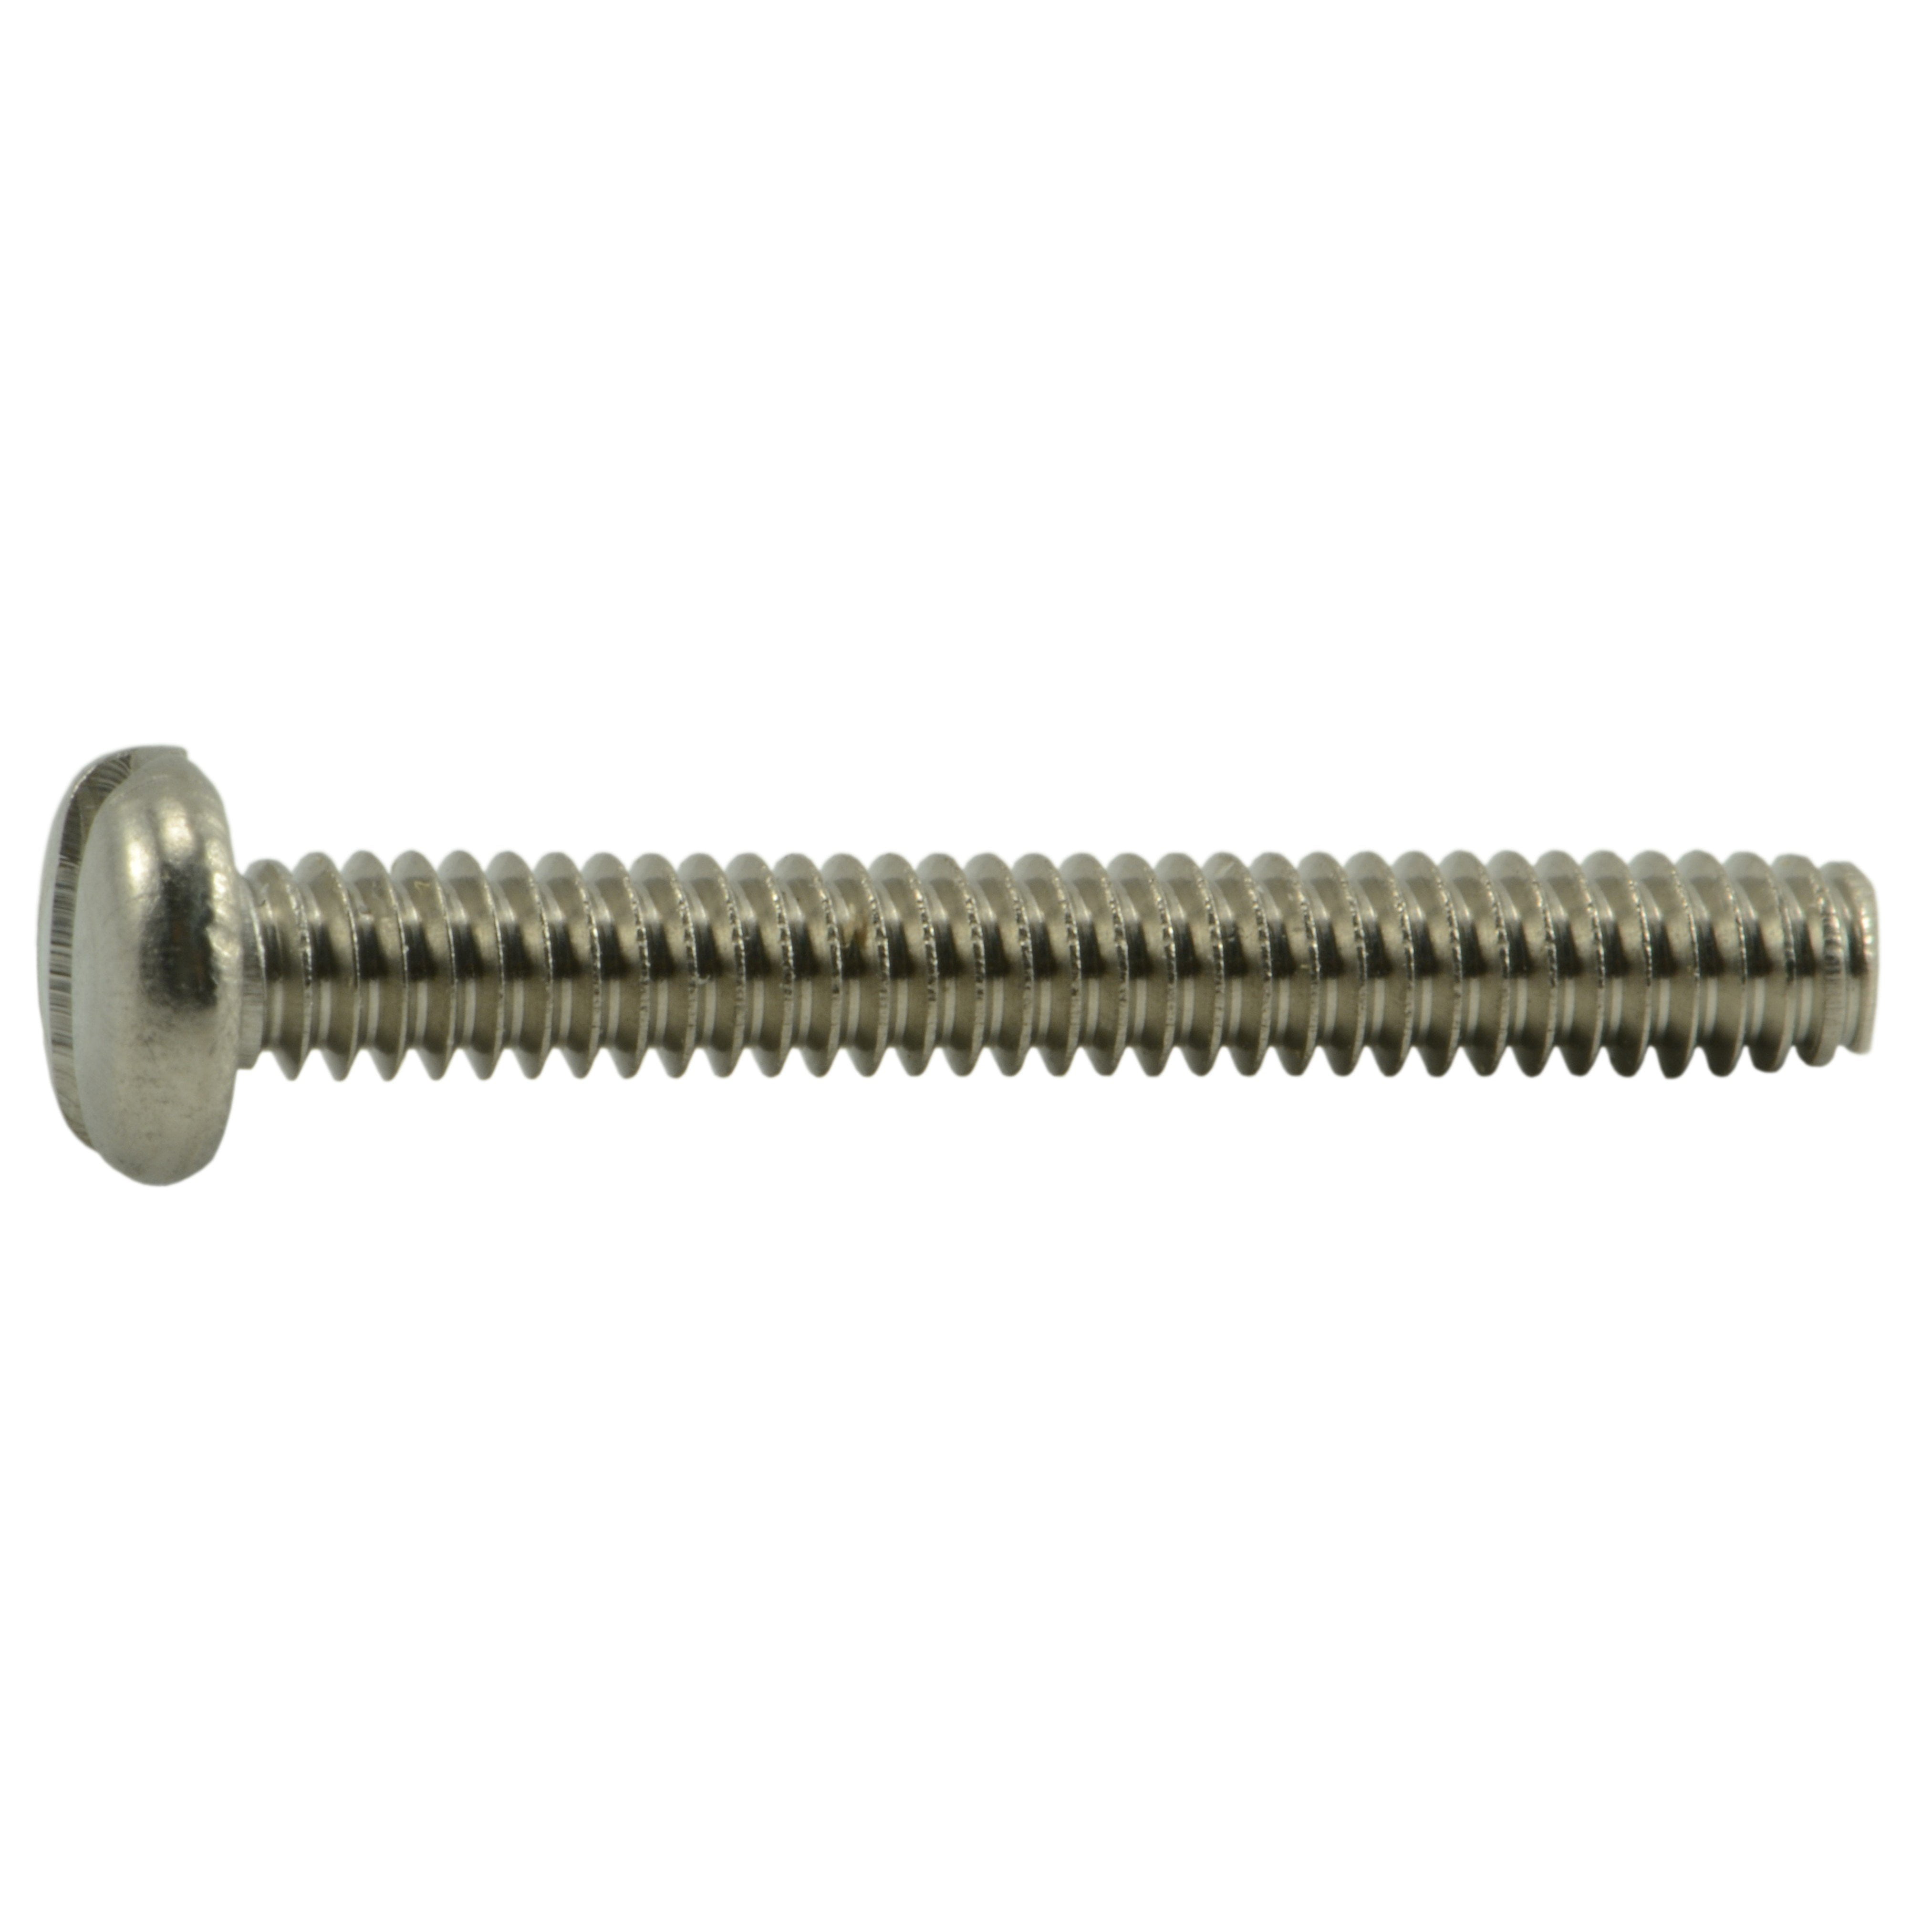 Button Head Socket Cap Screw Stainless Steel Screws UNC 3-48 x 1/4 Qty 50